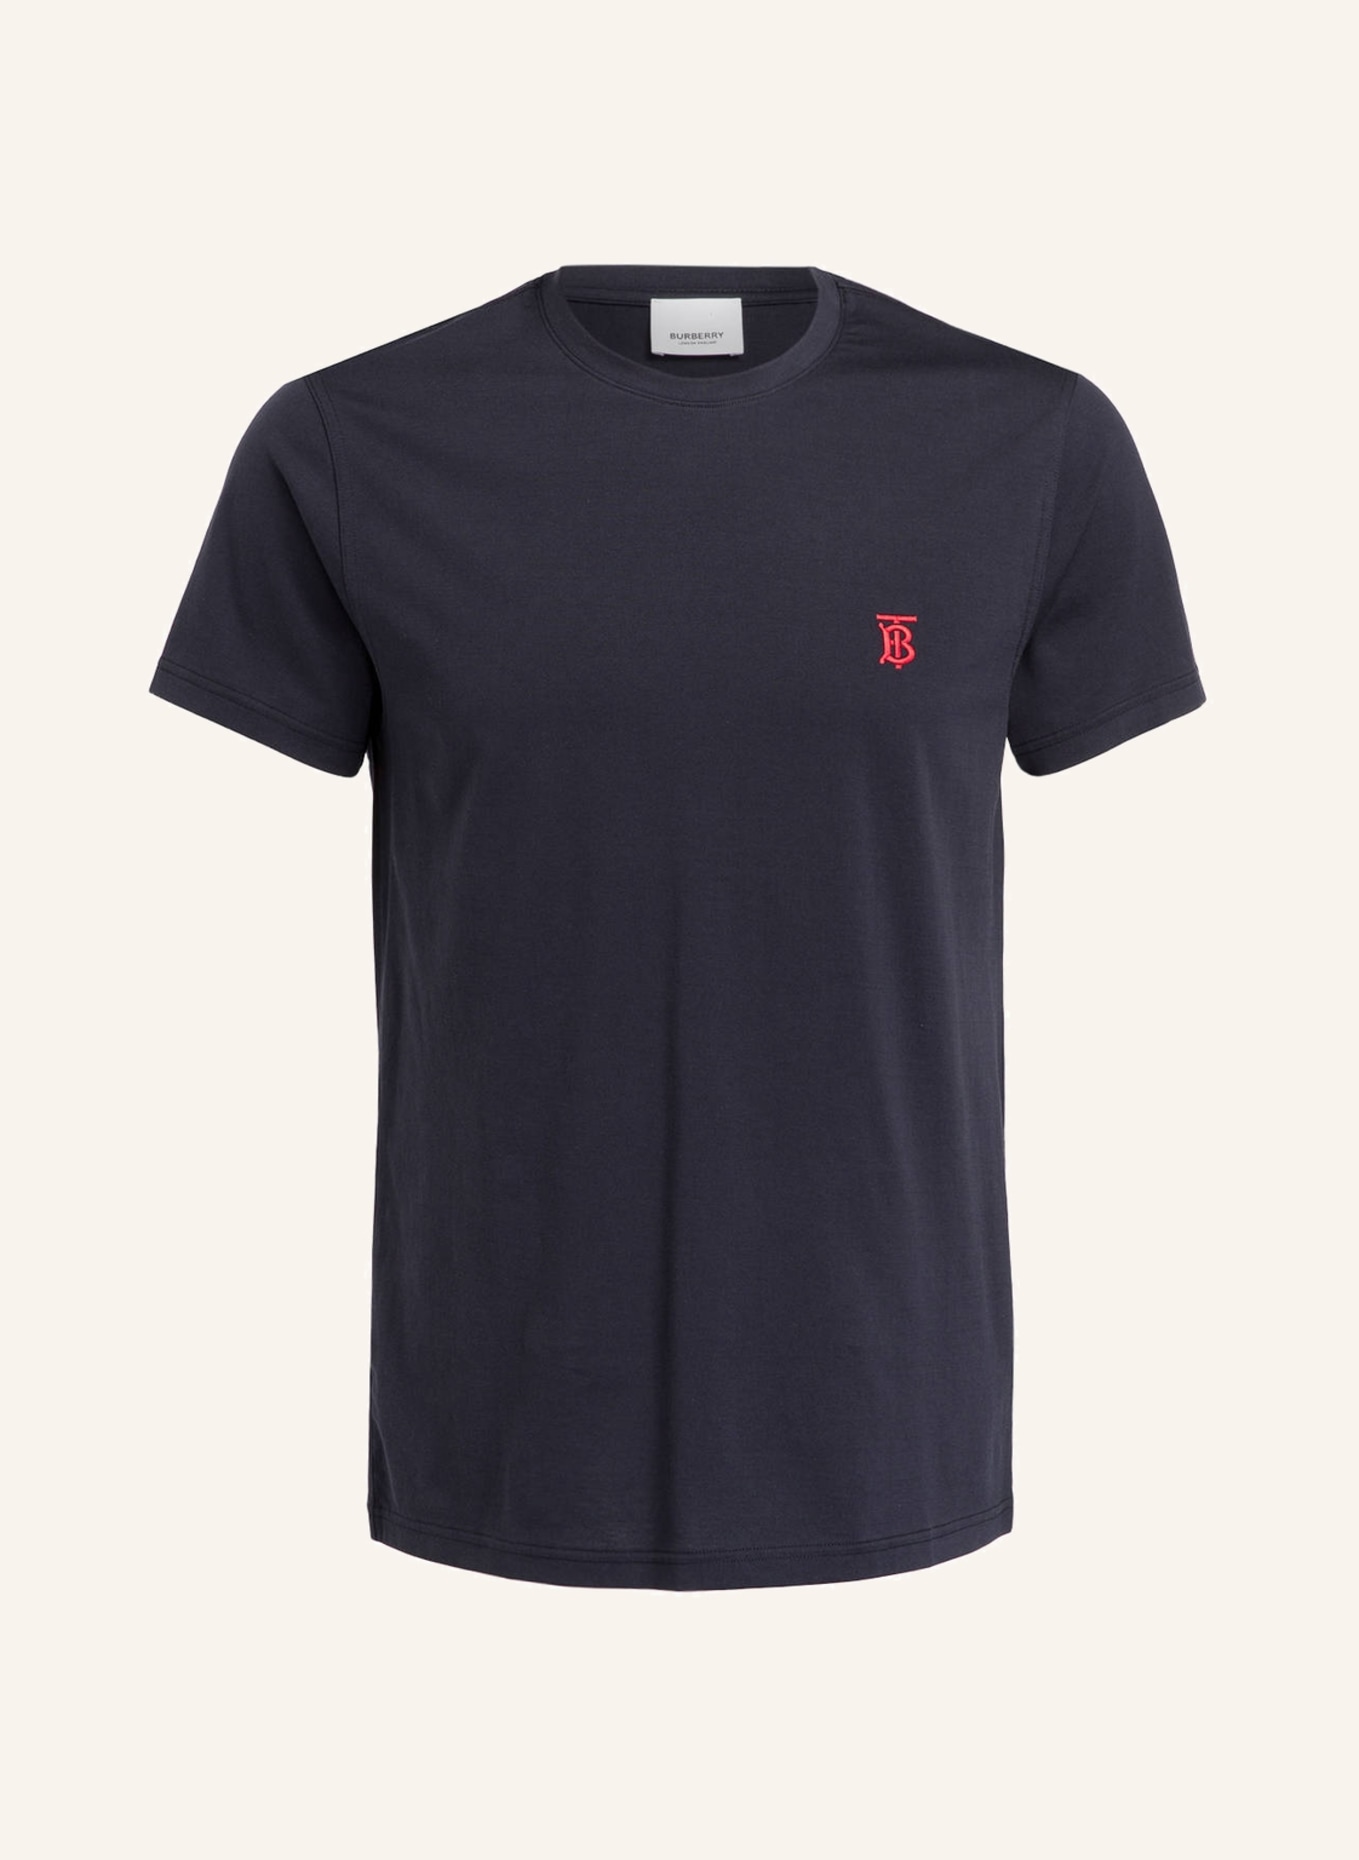 BURBERRY T-Shirt PARKER, Farbe: NAVY (Bild 1)